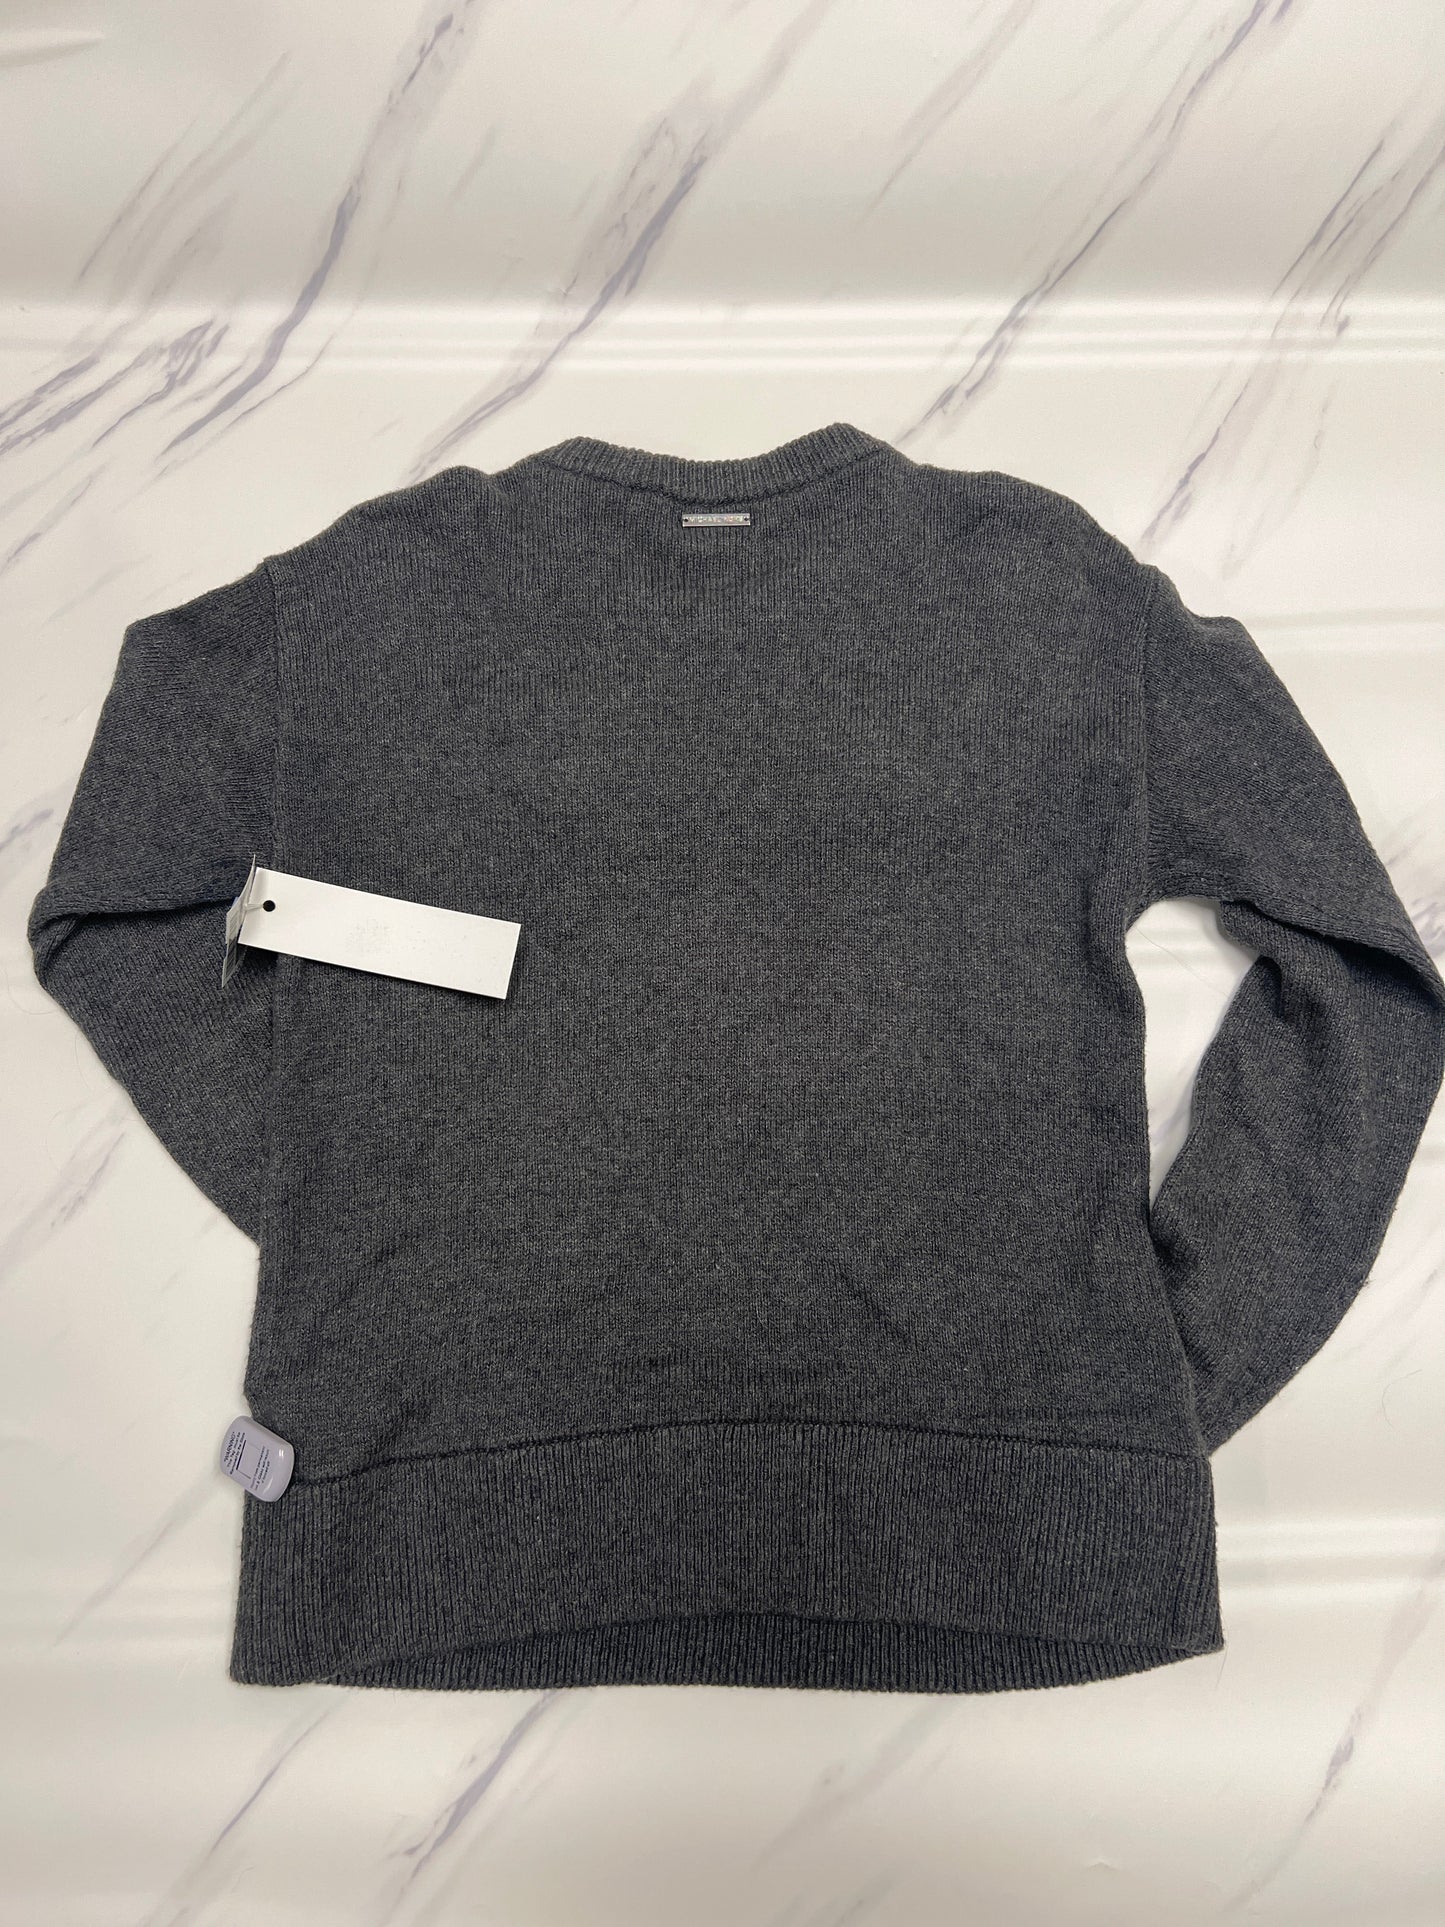 Sweater By Michael By Michael Kors  Size: Xxs